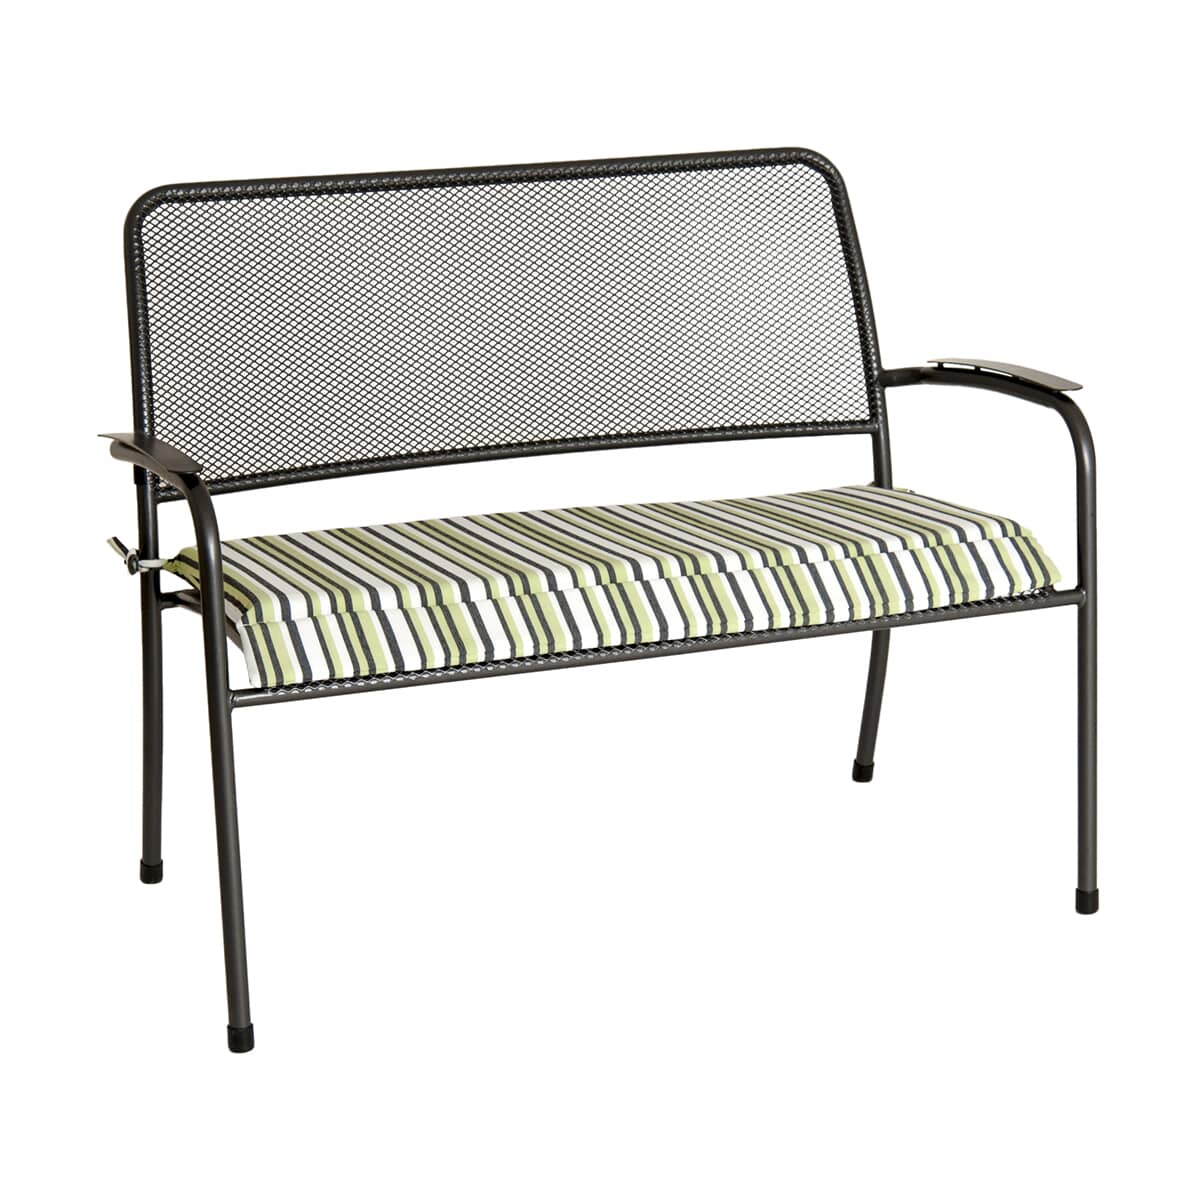 Alexander Rose Portofino Cushion for Bench - Green Stripe